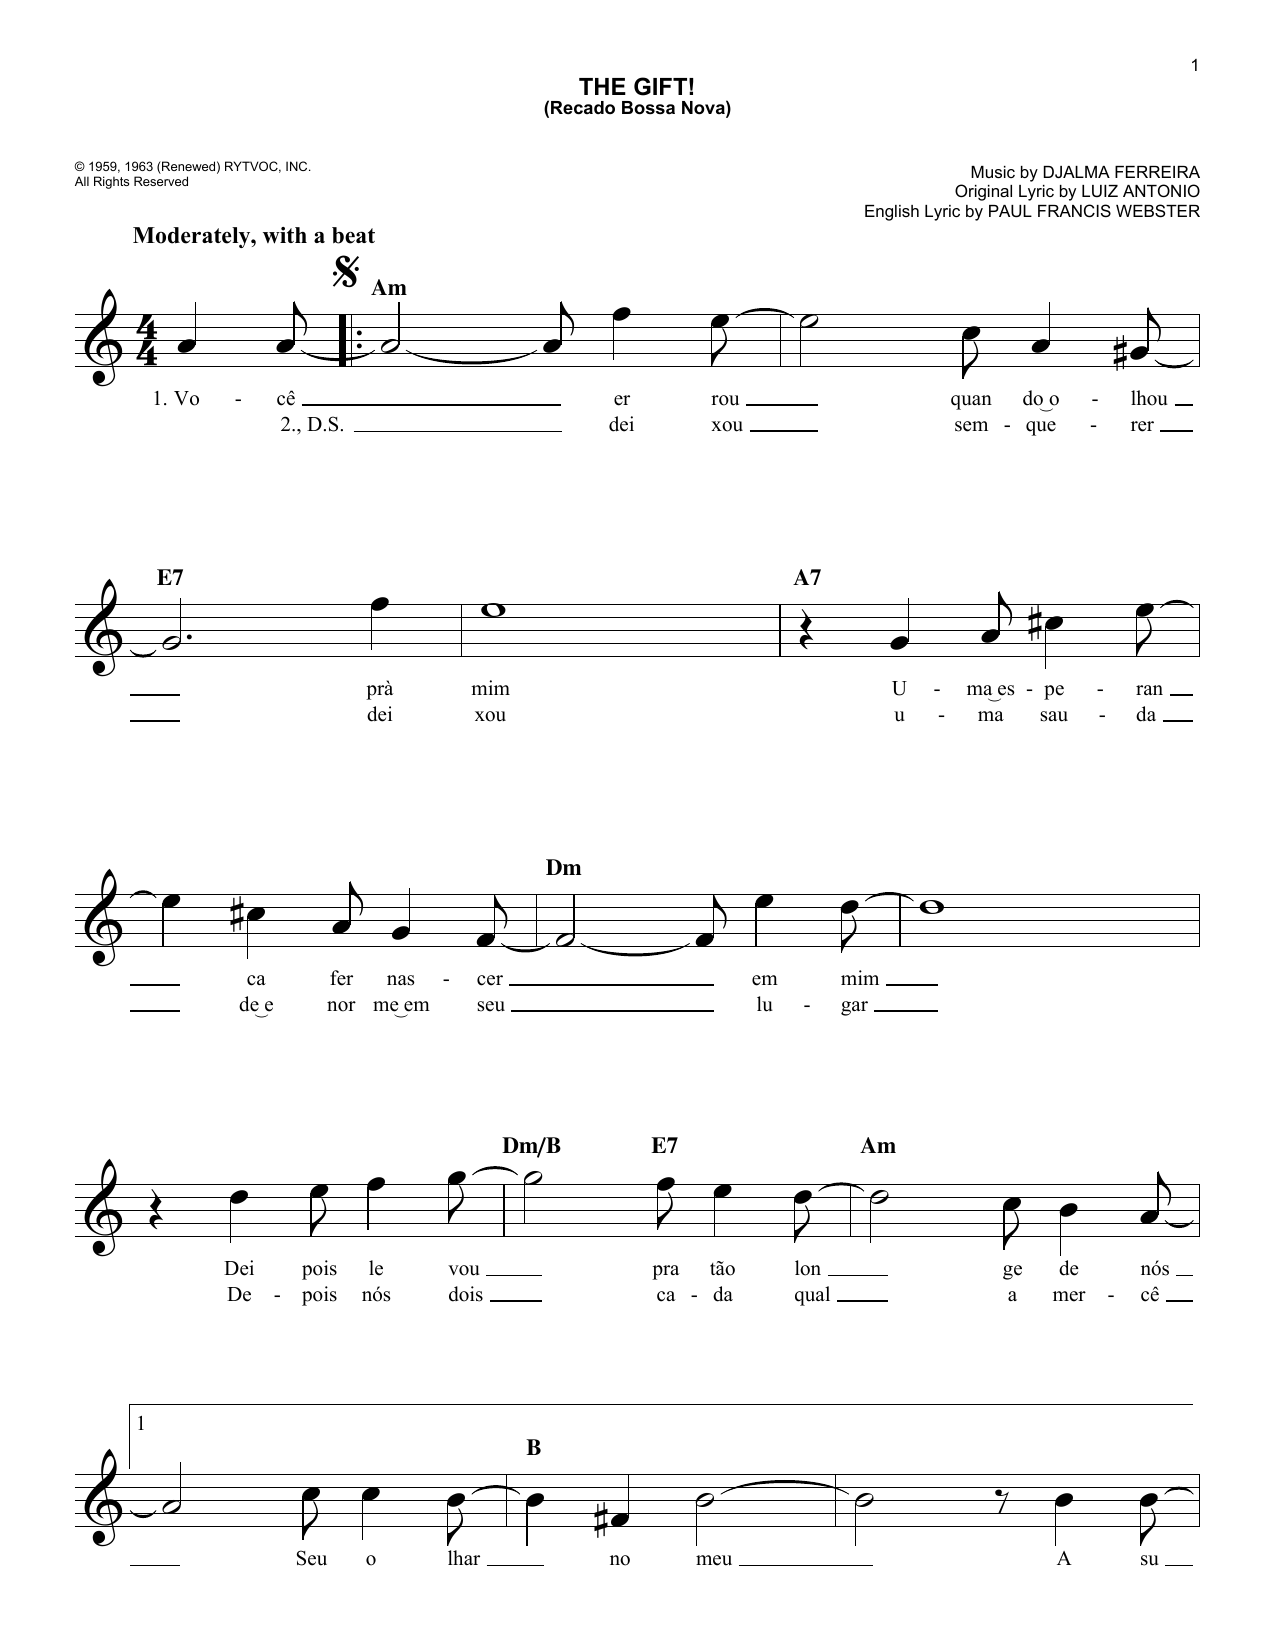 Djalma Ferreira The Gift! (Recado Bossa Nova) Sheet Music Notes & Chords for Melody Line, Lyrics & Chords - Download or Print PDF